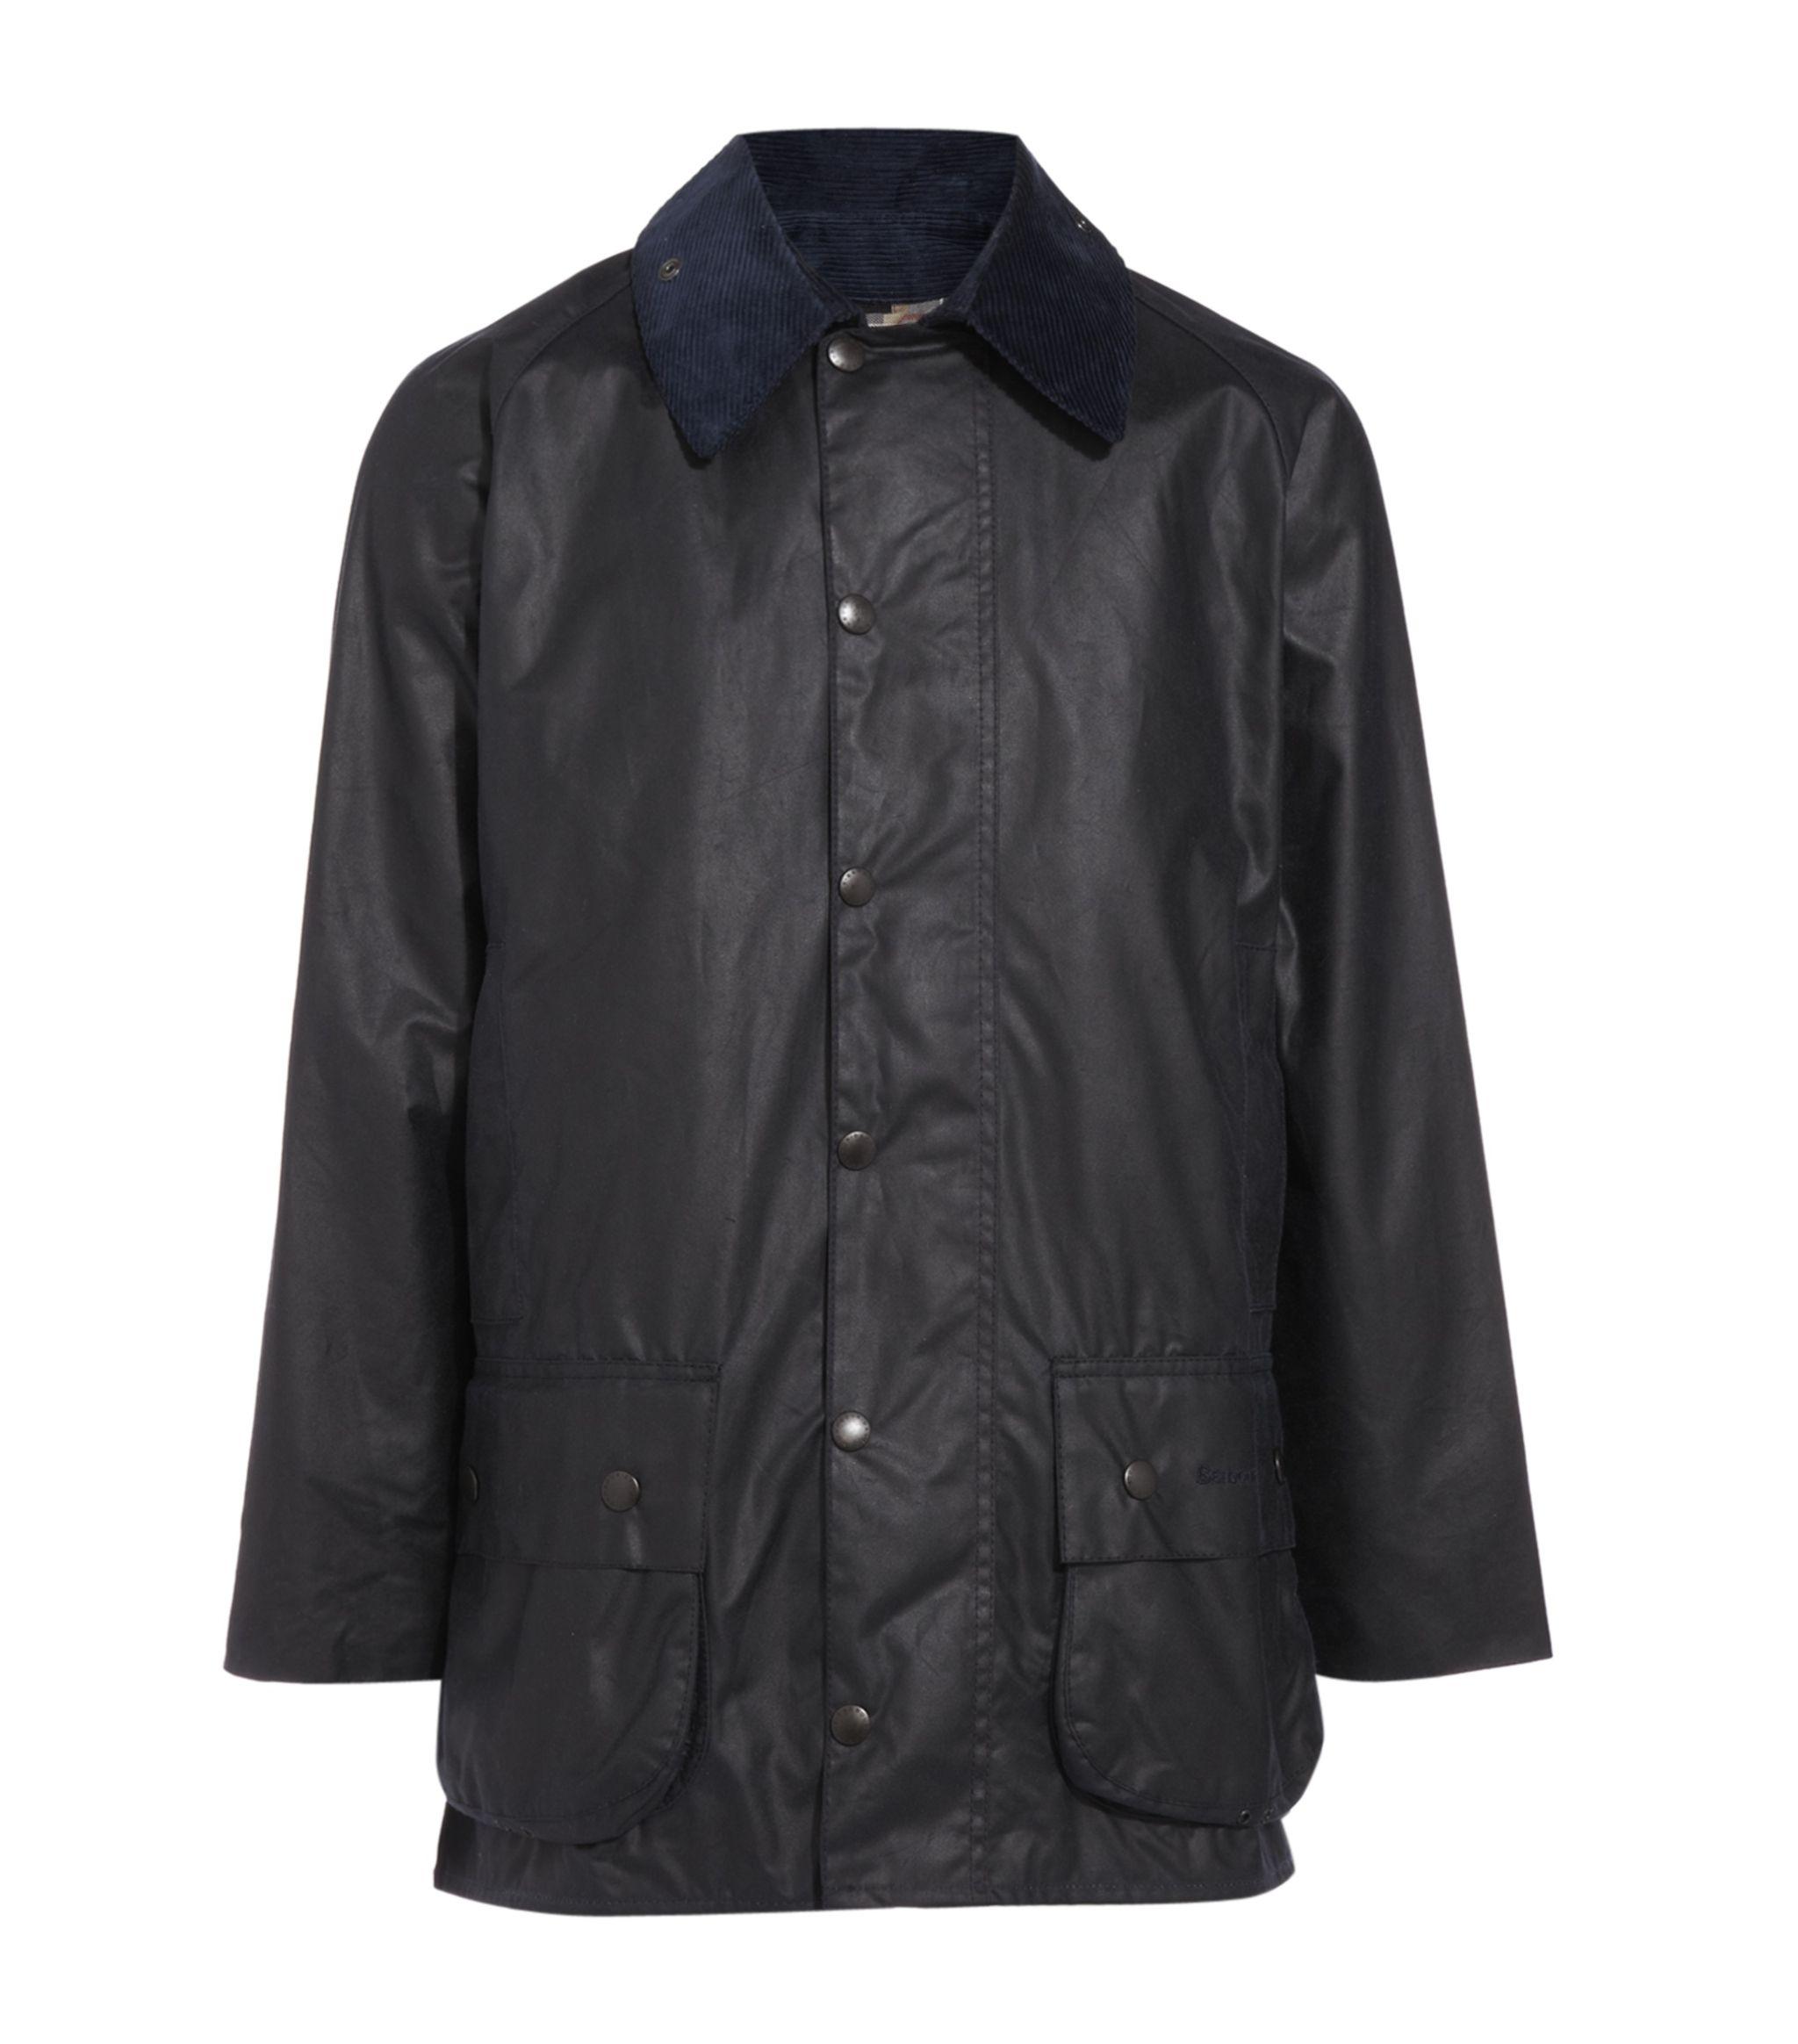 Barbour Corduroy Beaufort Jacket in Black for Men - Save 21% - Lyst